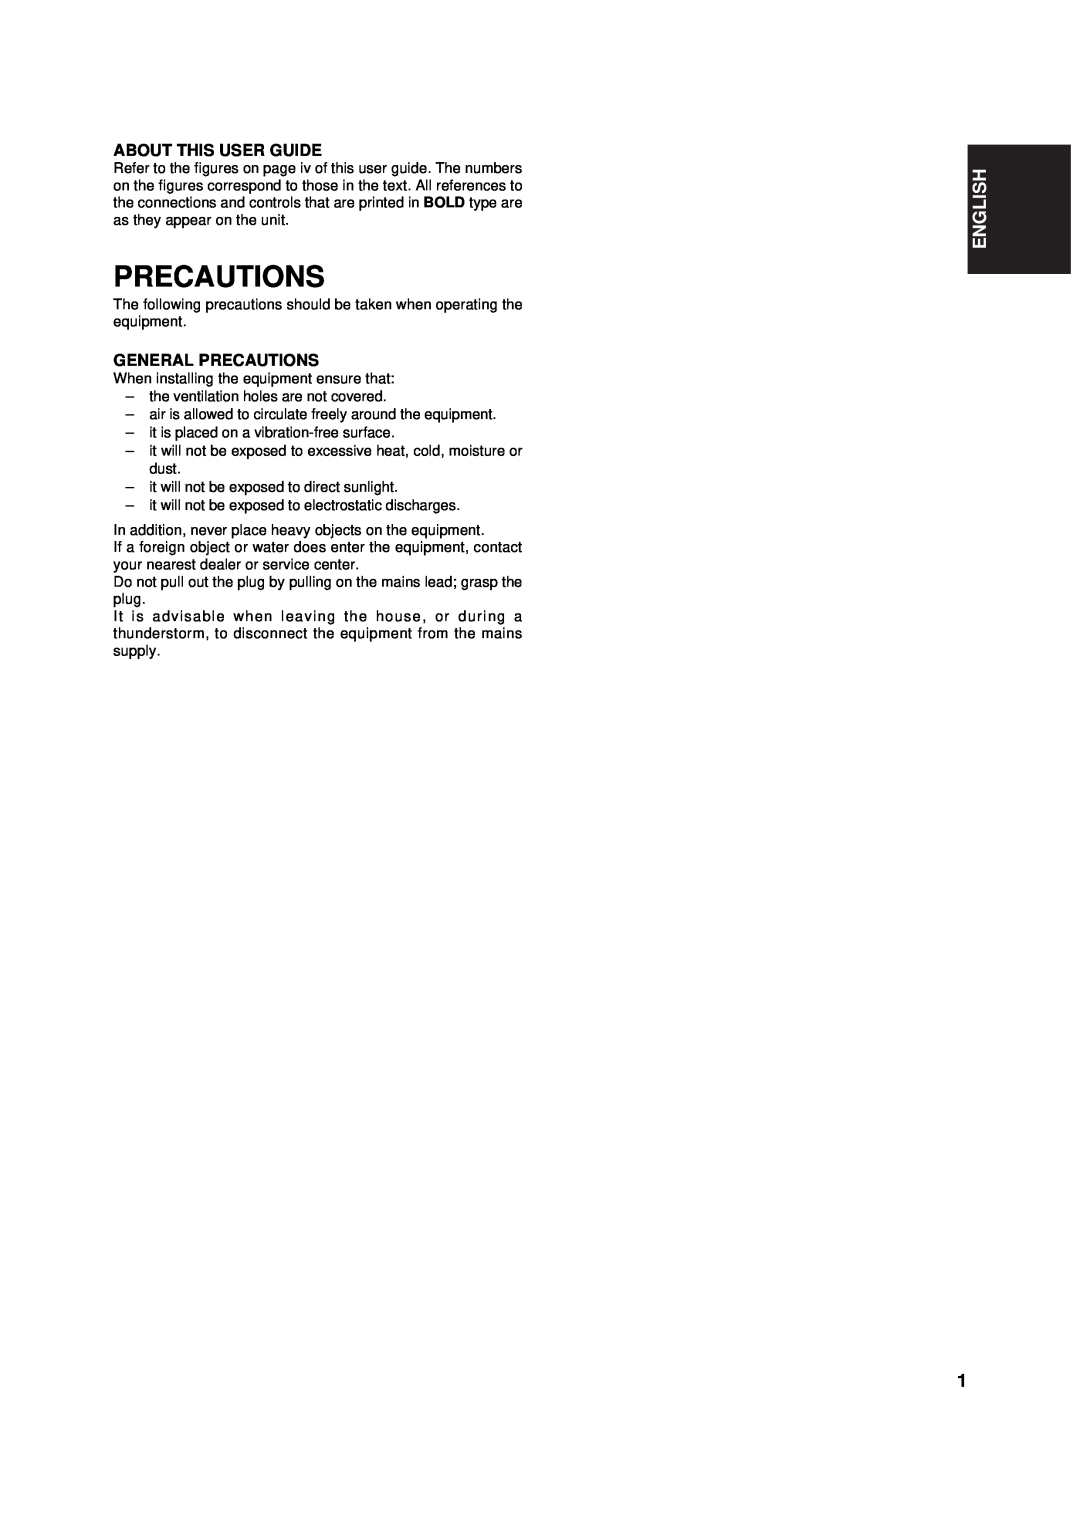 Marantz CD110 manual English, About This User Guide, General Precautions 